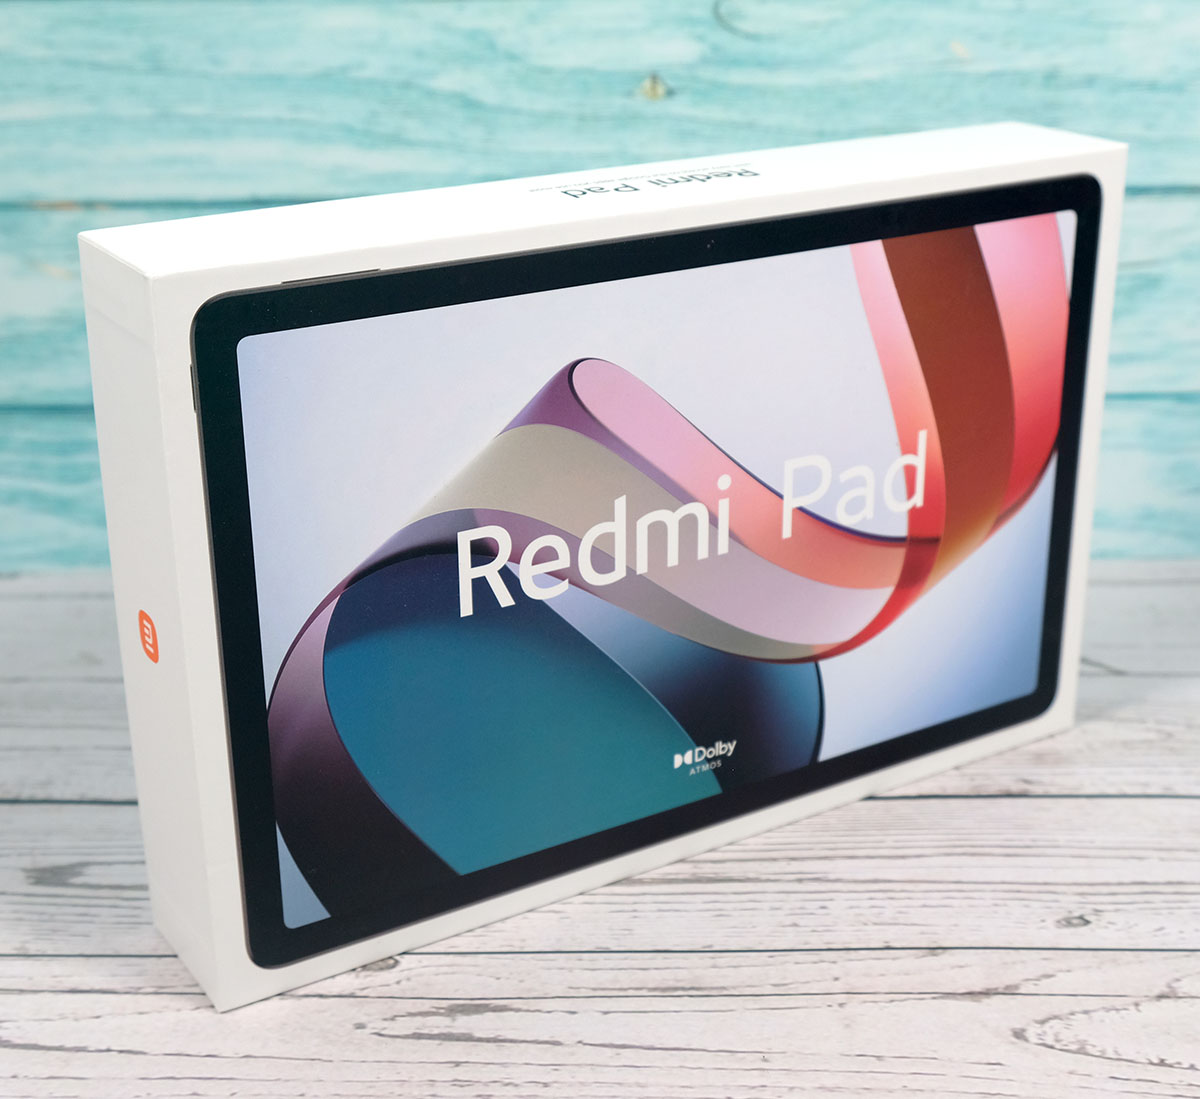 Redmi Pad SE Unboxing & Review